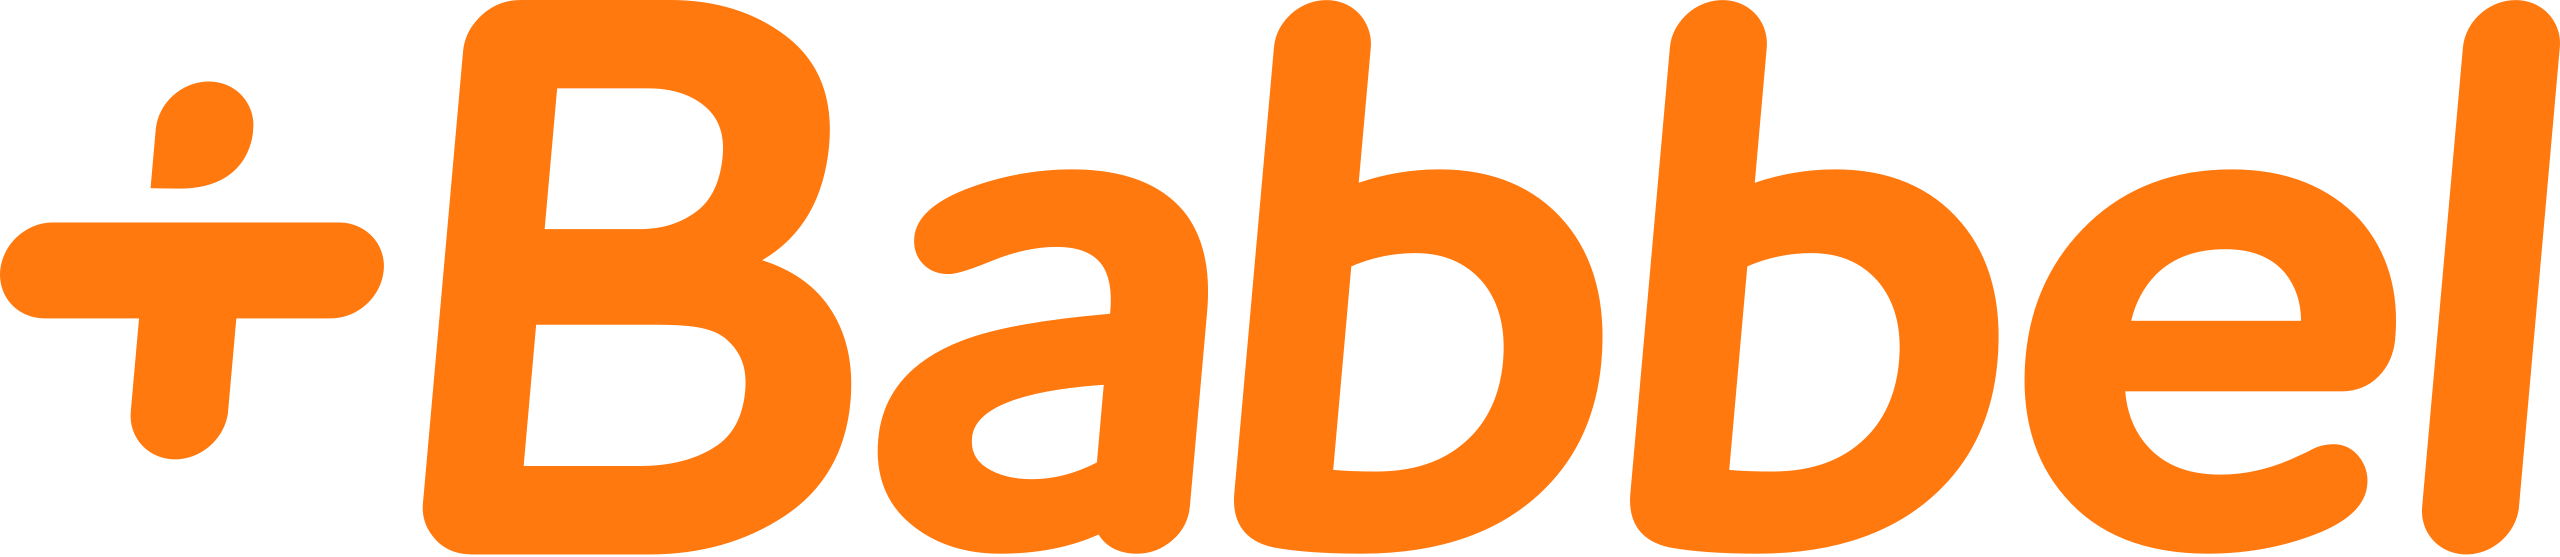 File:Babbel logo.svg - Wikipedia